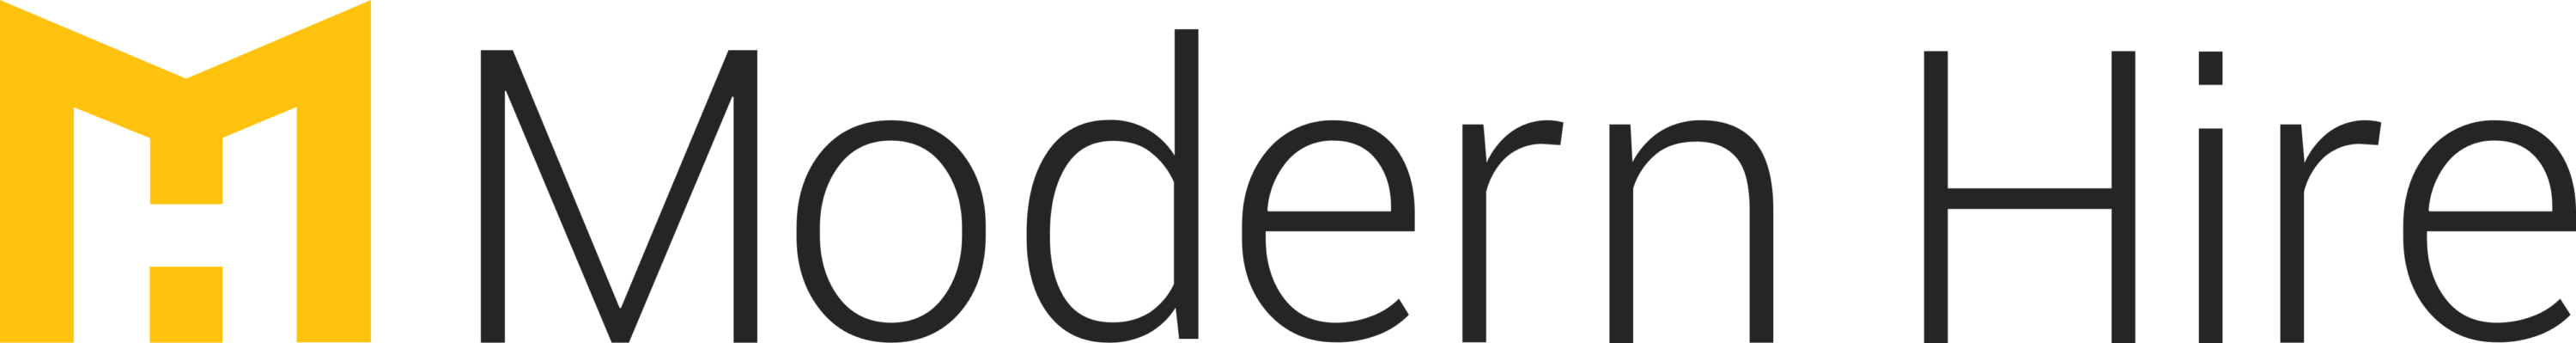 Modern Hire Logo